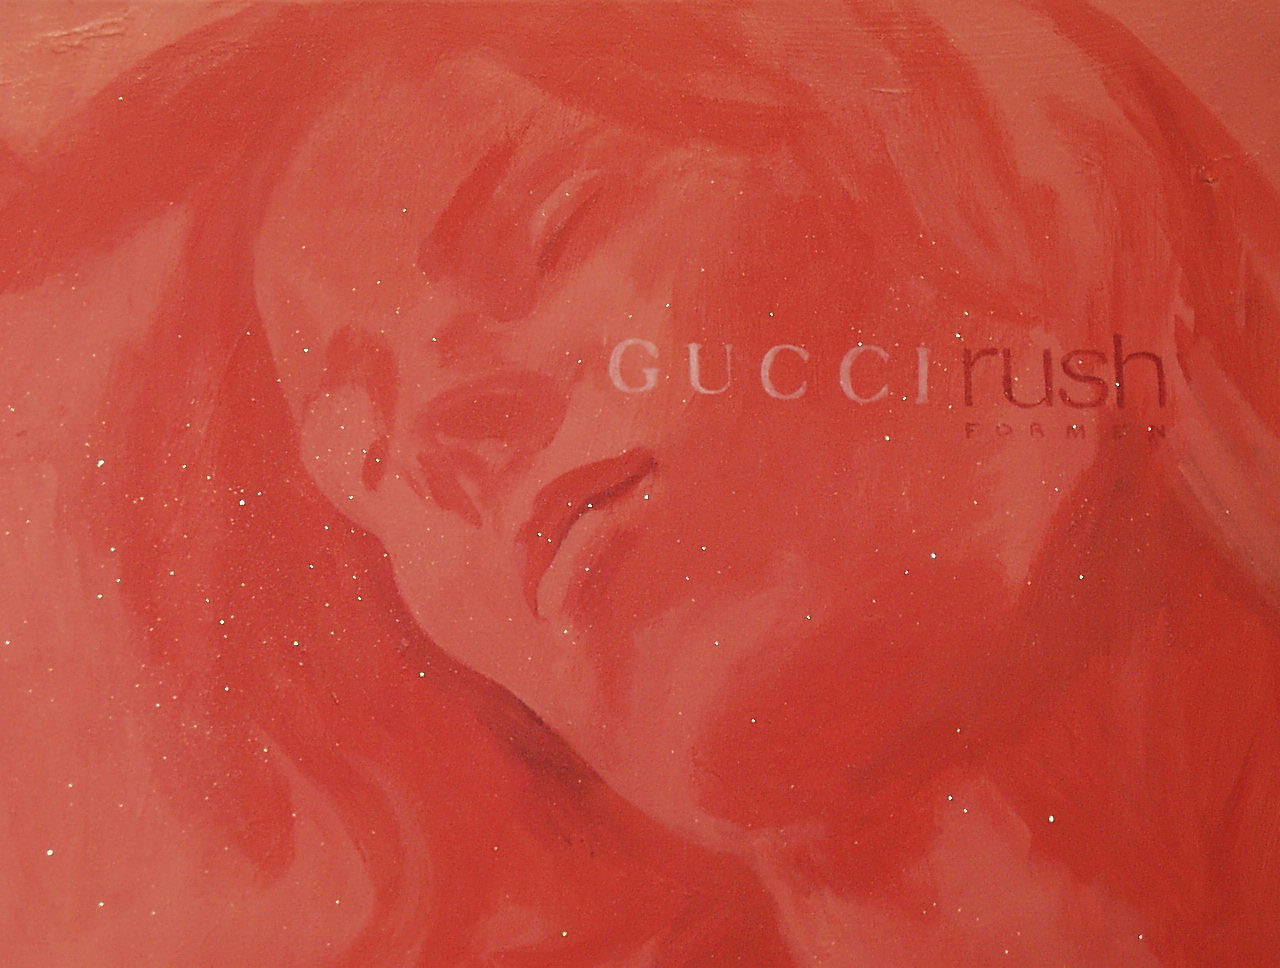 Agnieszka Brzeżańska - Gucci-Rush